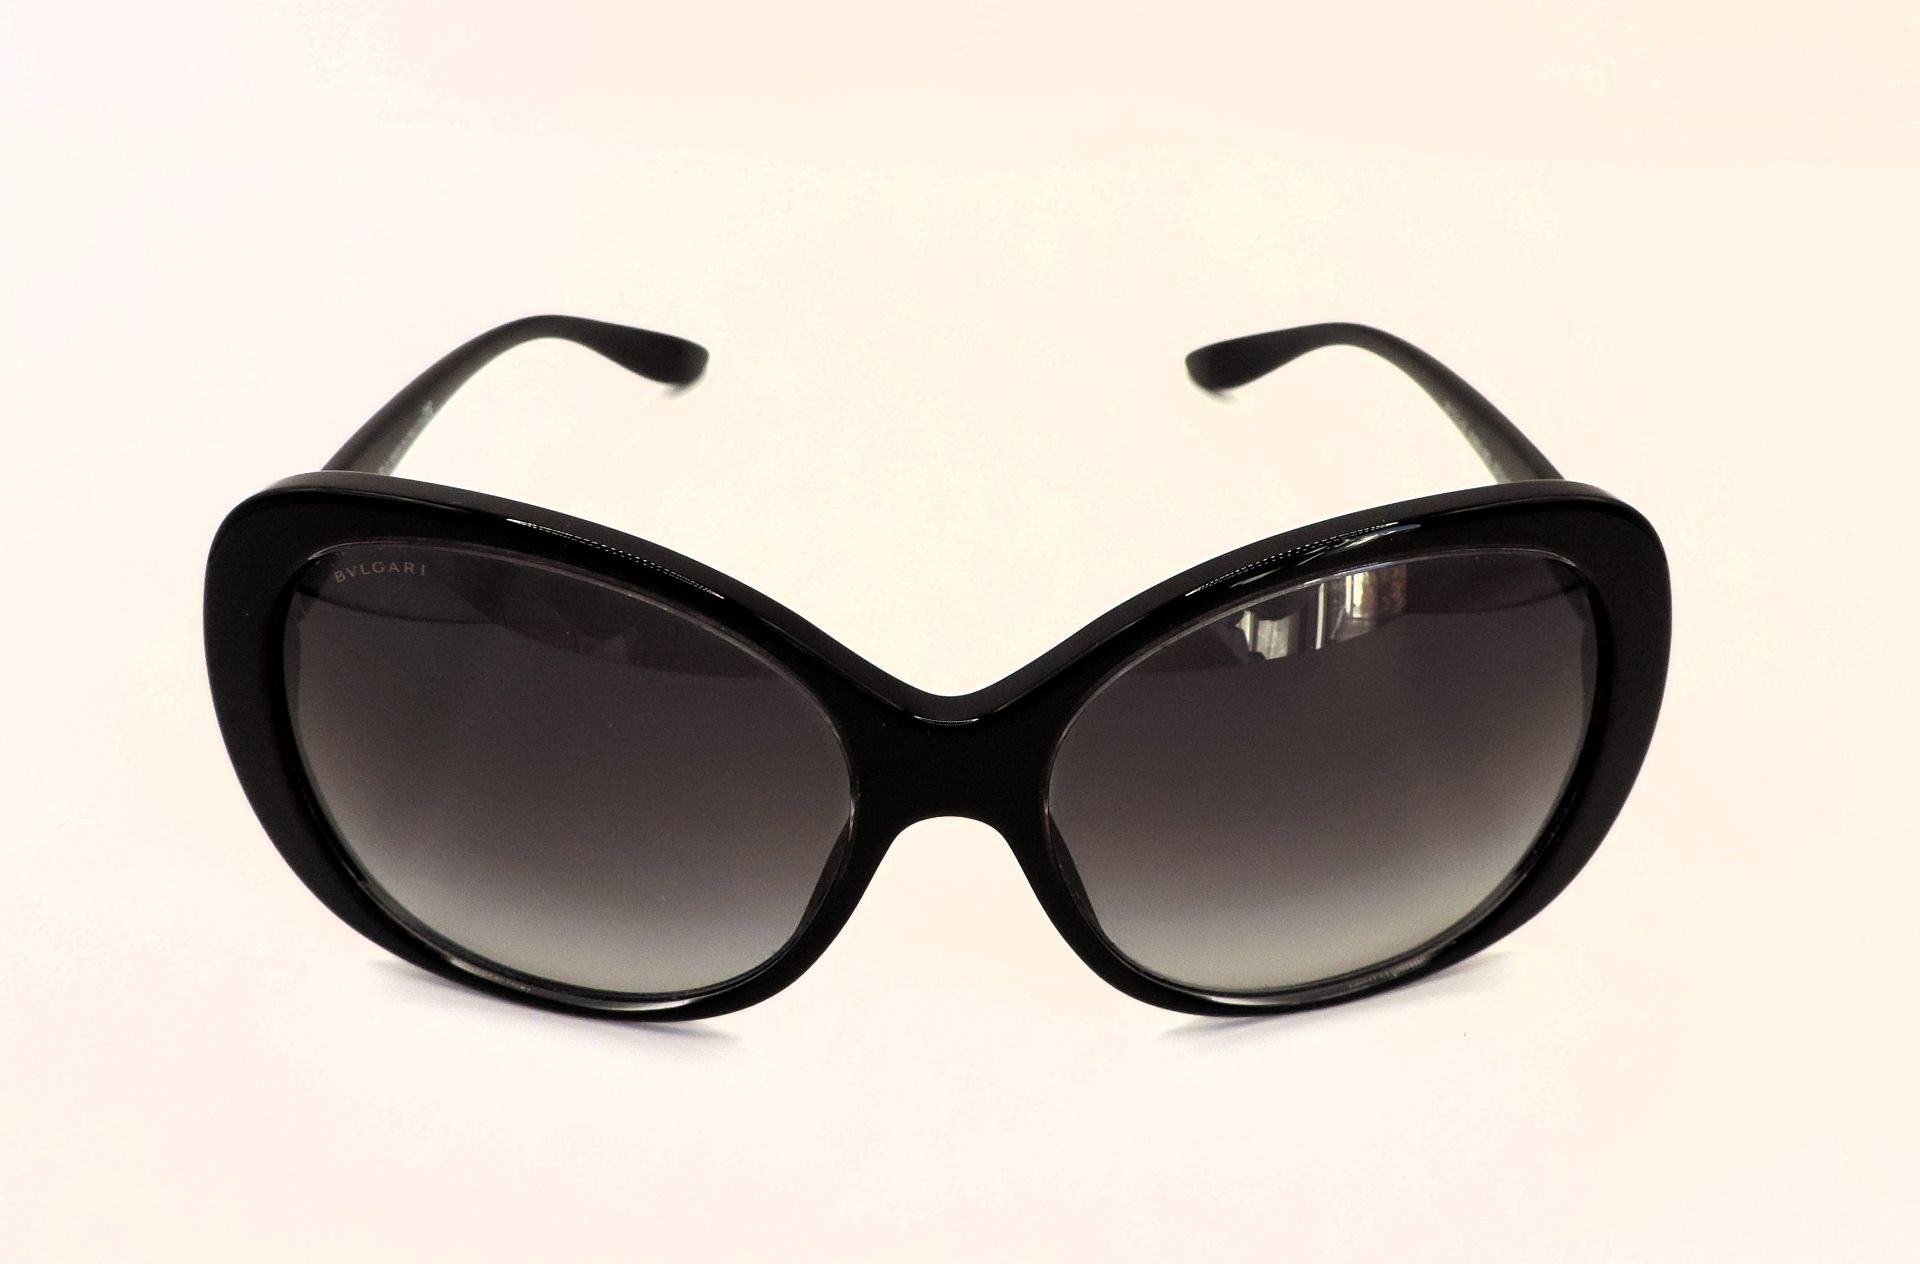 BVLGARI Black Sunglasses 8171-C Jewelled Hinged Detail New With Box & Certificate - Image 16 of 17